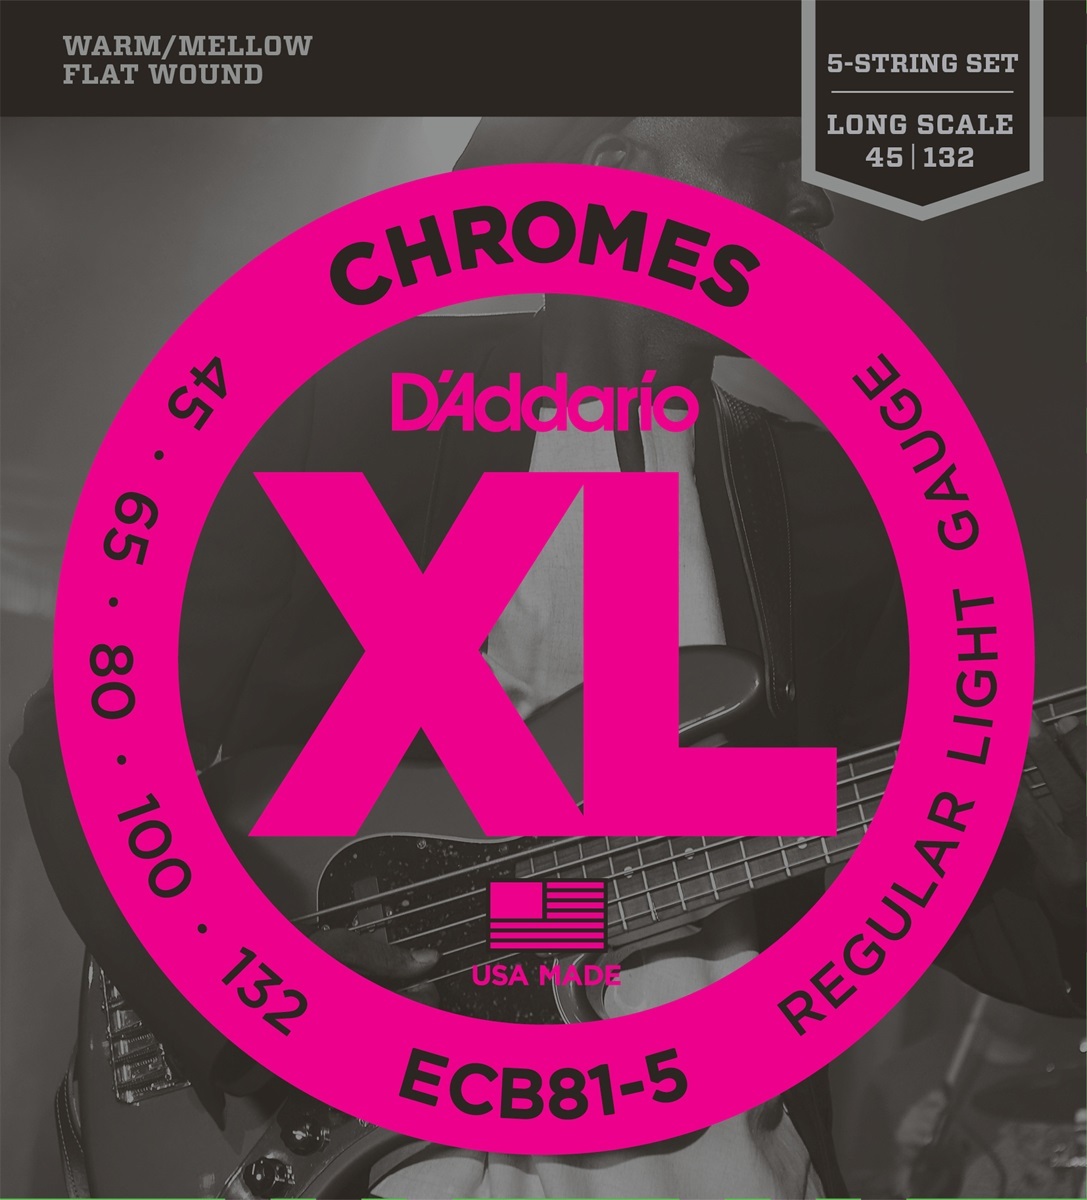 D'addario Jeu De 5 Cordes Basse Elec. 5c Chromes Long Scale 045.132 Ecb81.5 - E-Bass Saiten - Main picture